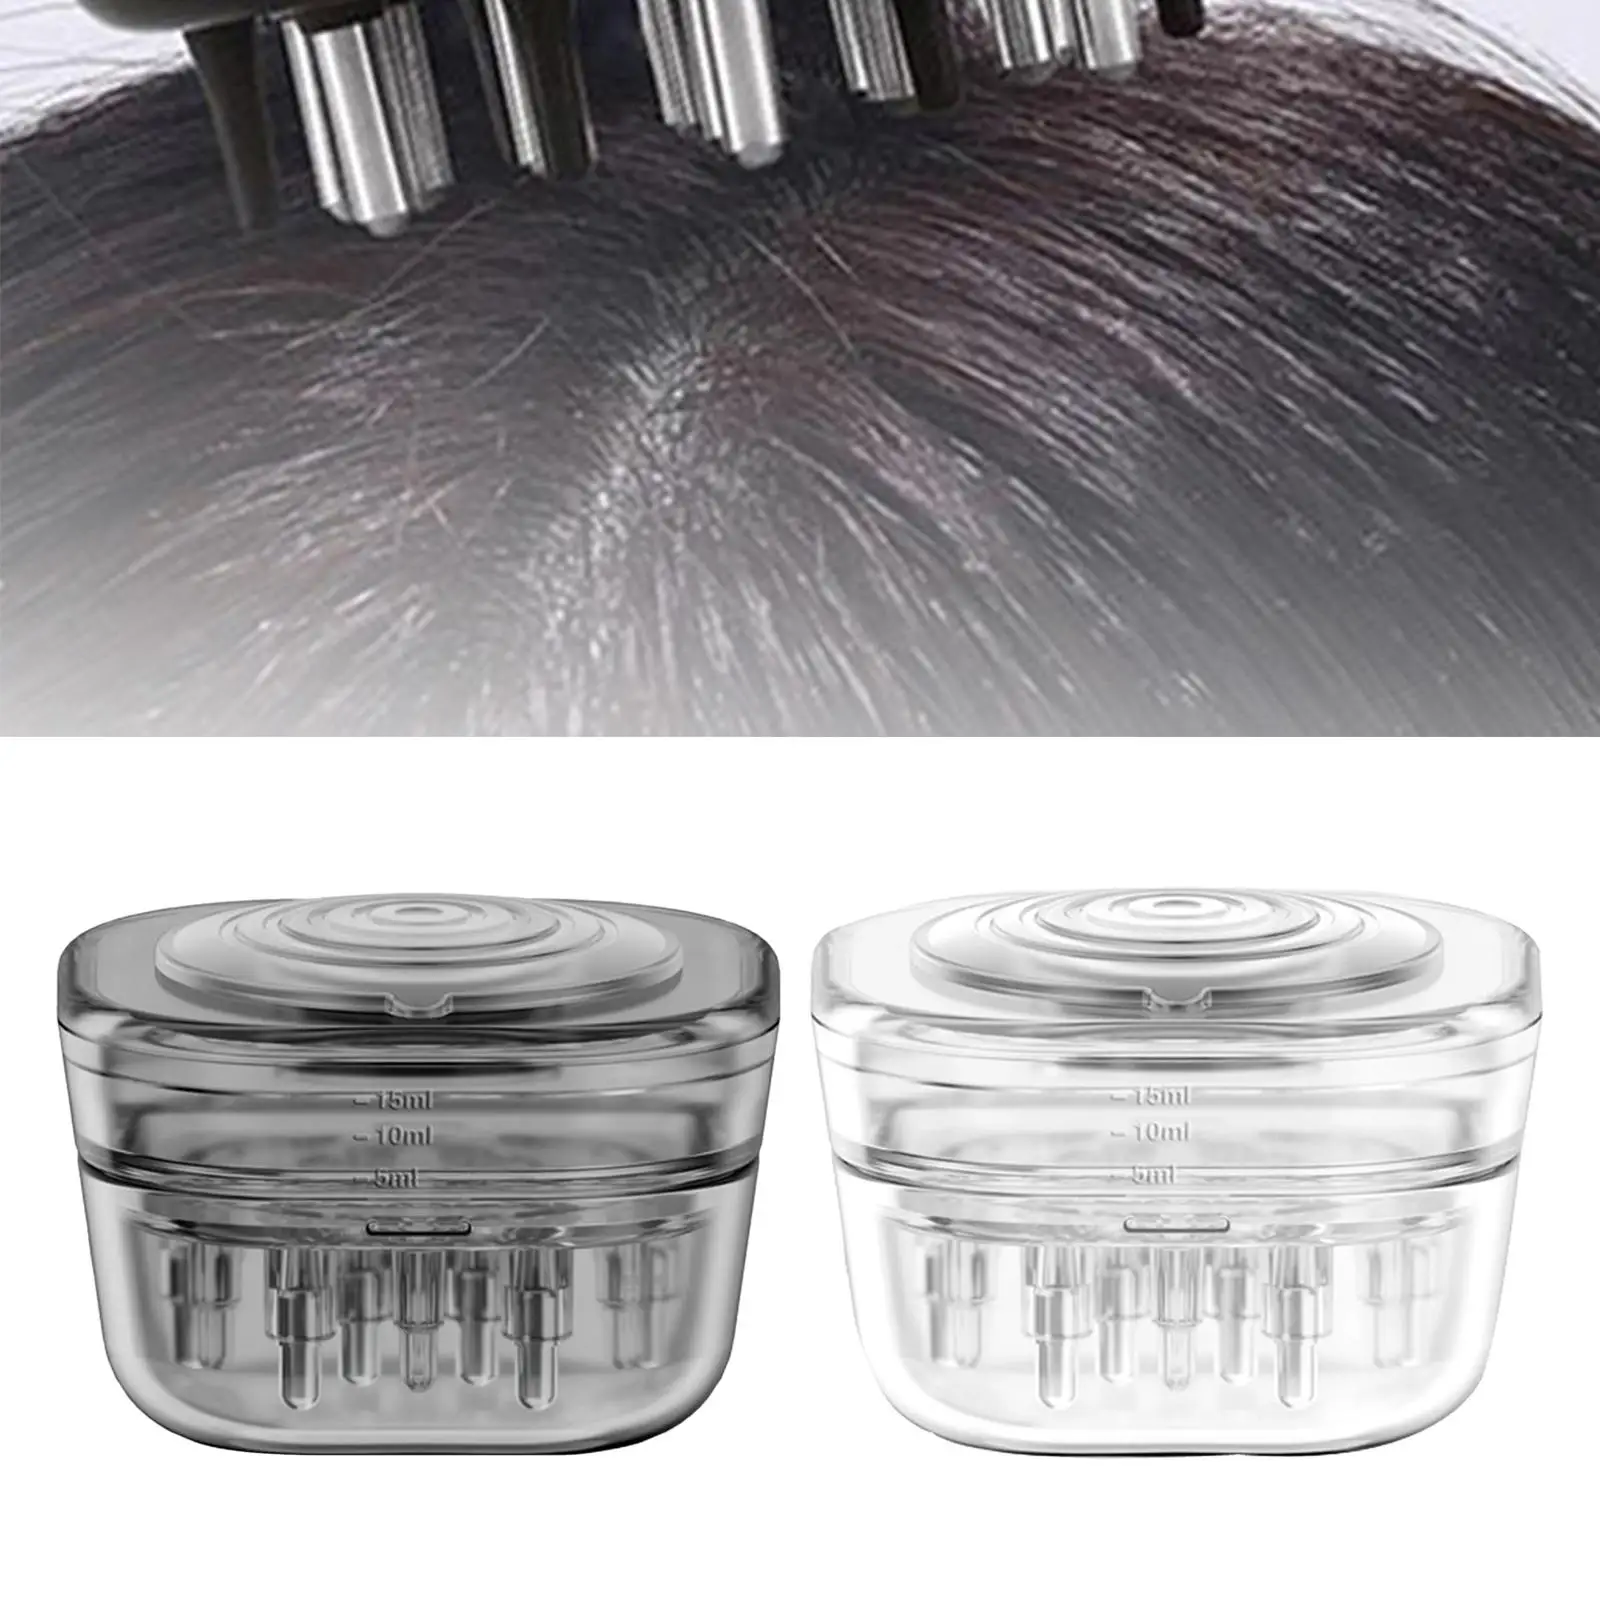 Compact Scalp Applicator Comb Multiple Function PP Evenly Spread Hair Brush Hairbrush Hair Applicator for Travel